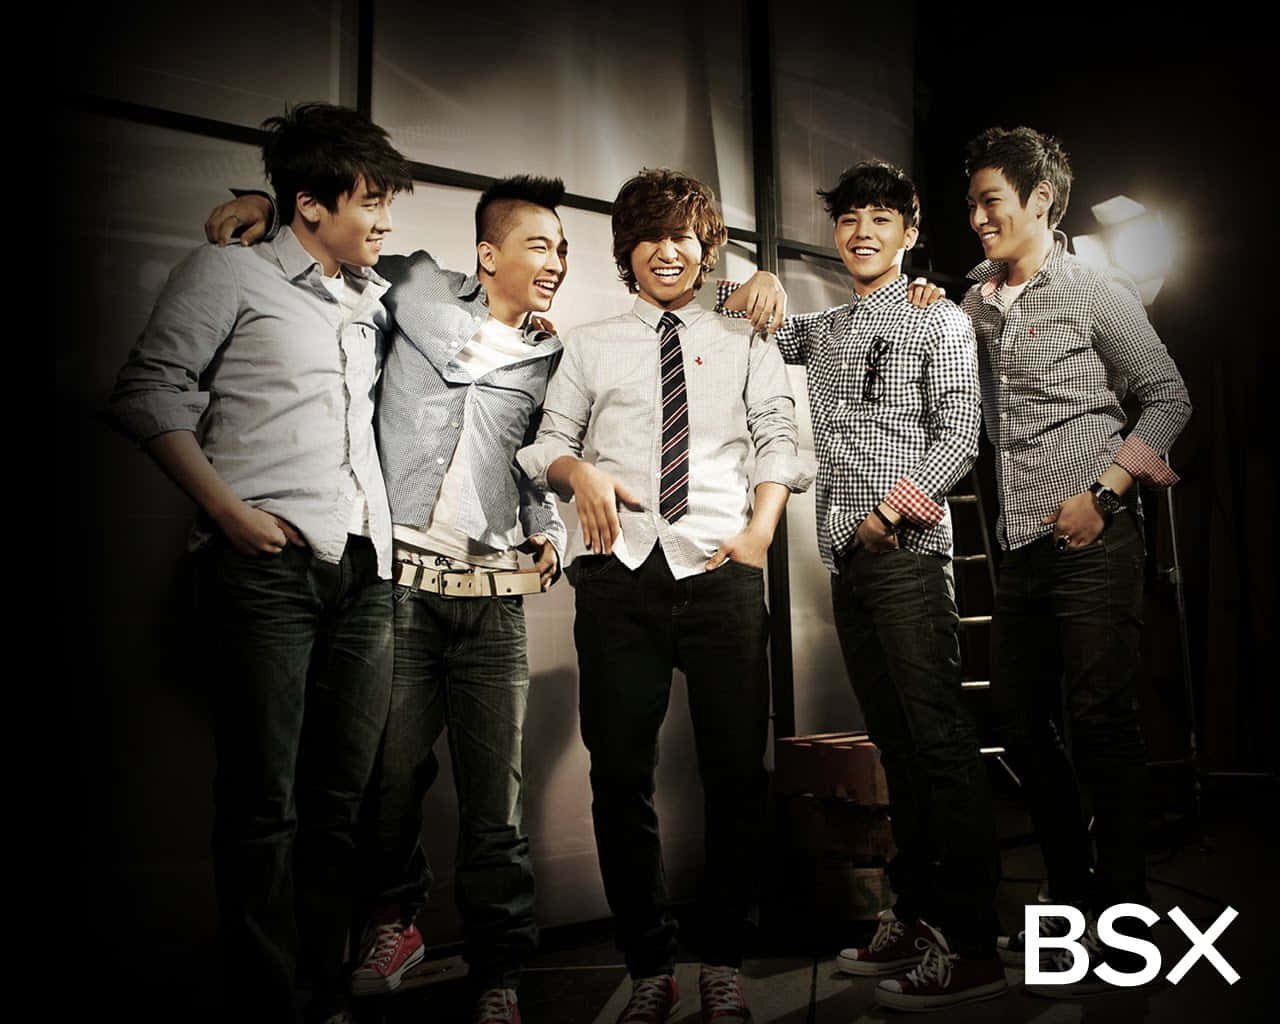 An art-inspired photo of Bigbang band members